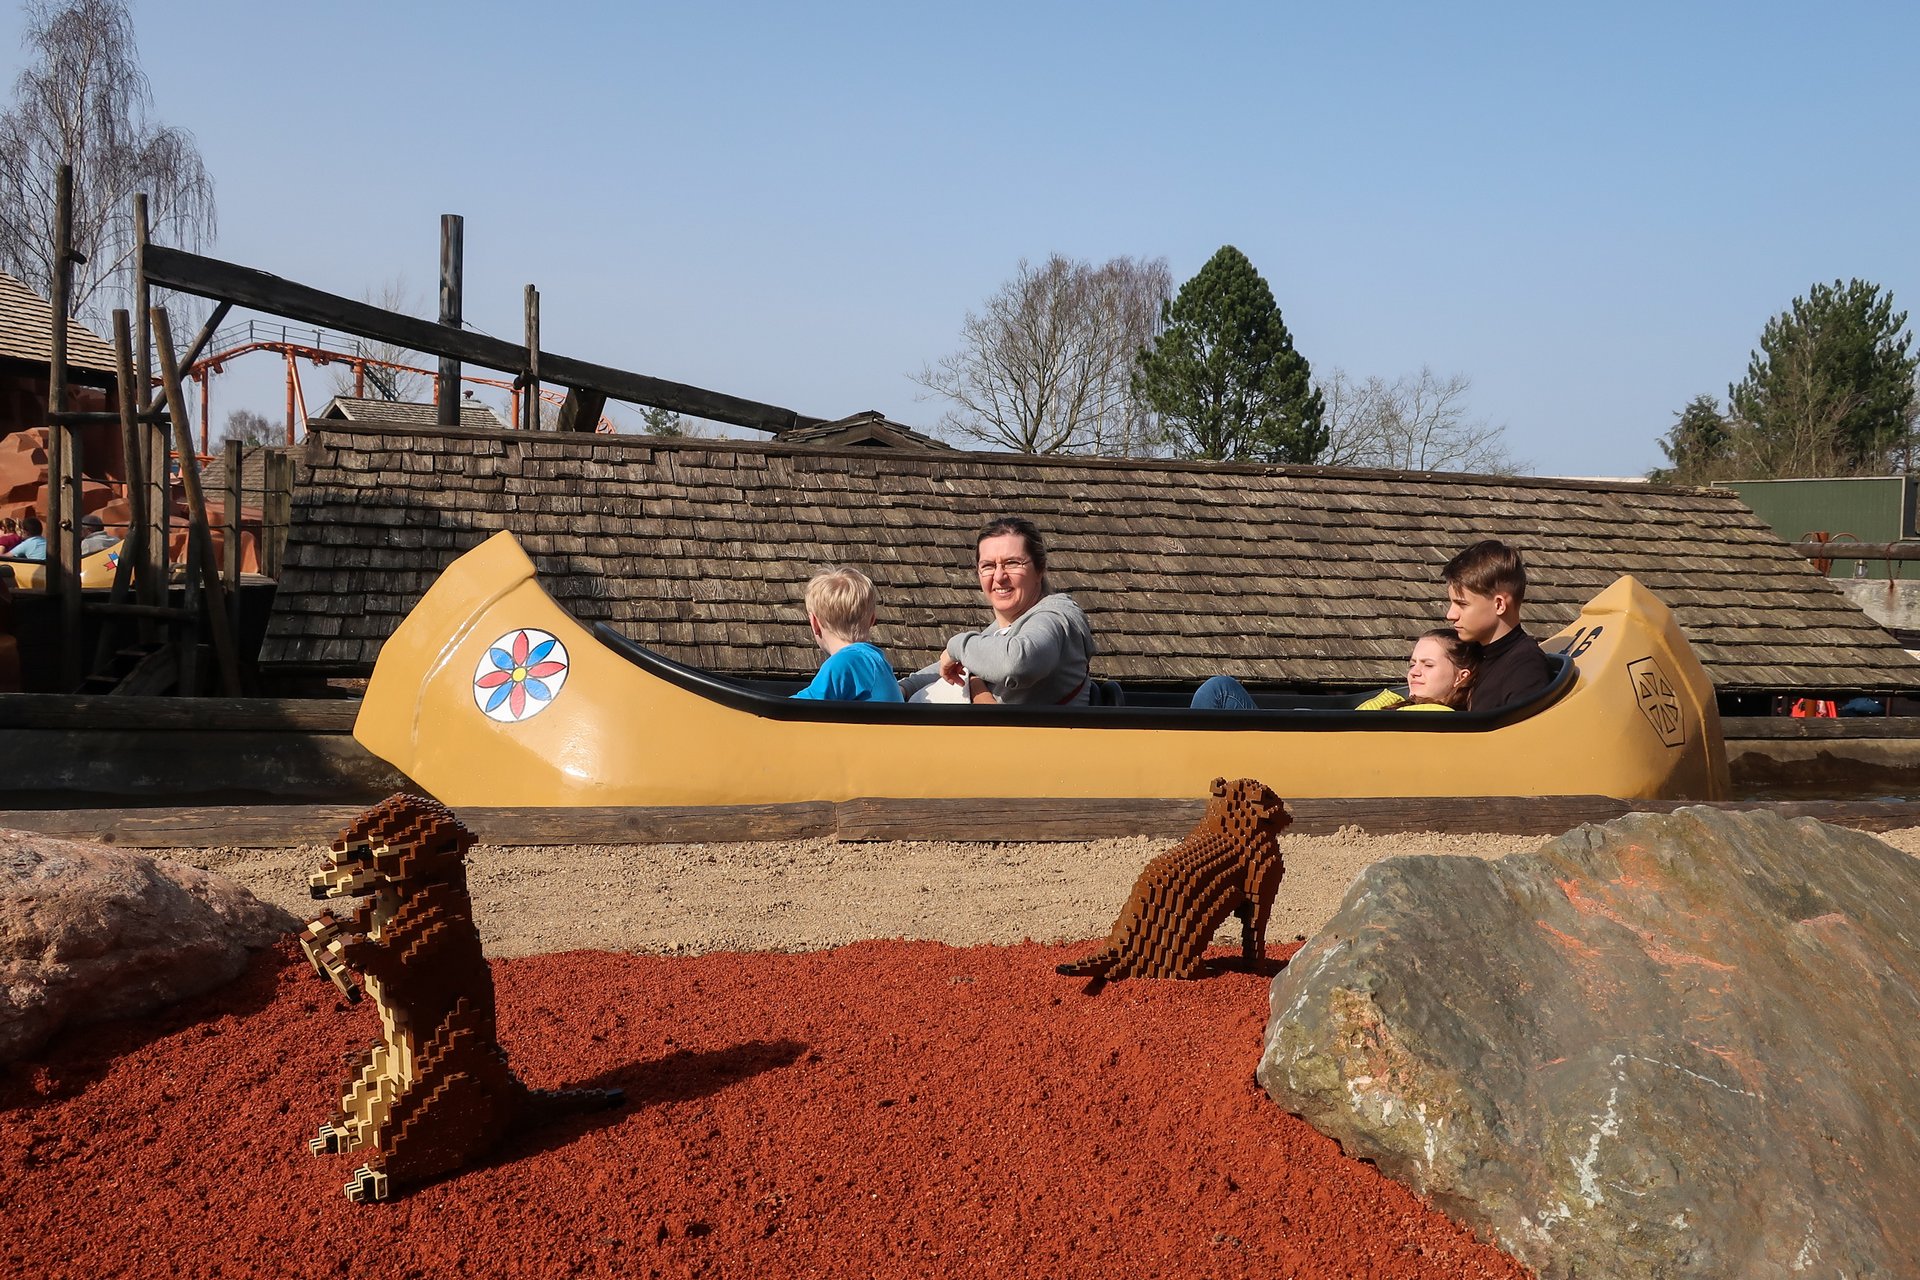 Лодка в стиле индейского каяка в парке развлечений Леголенд в Дании